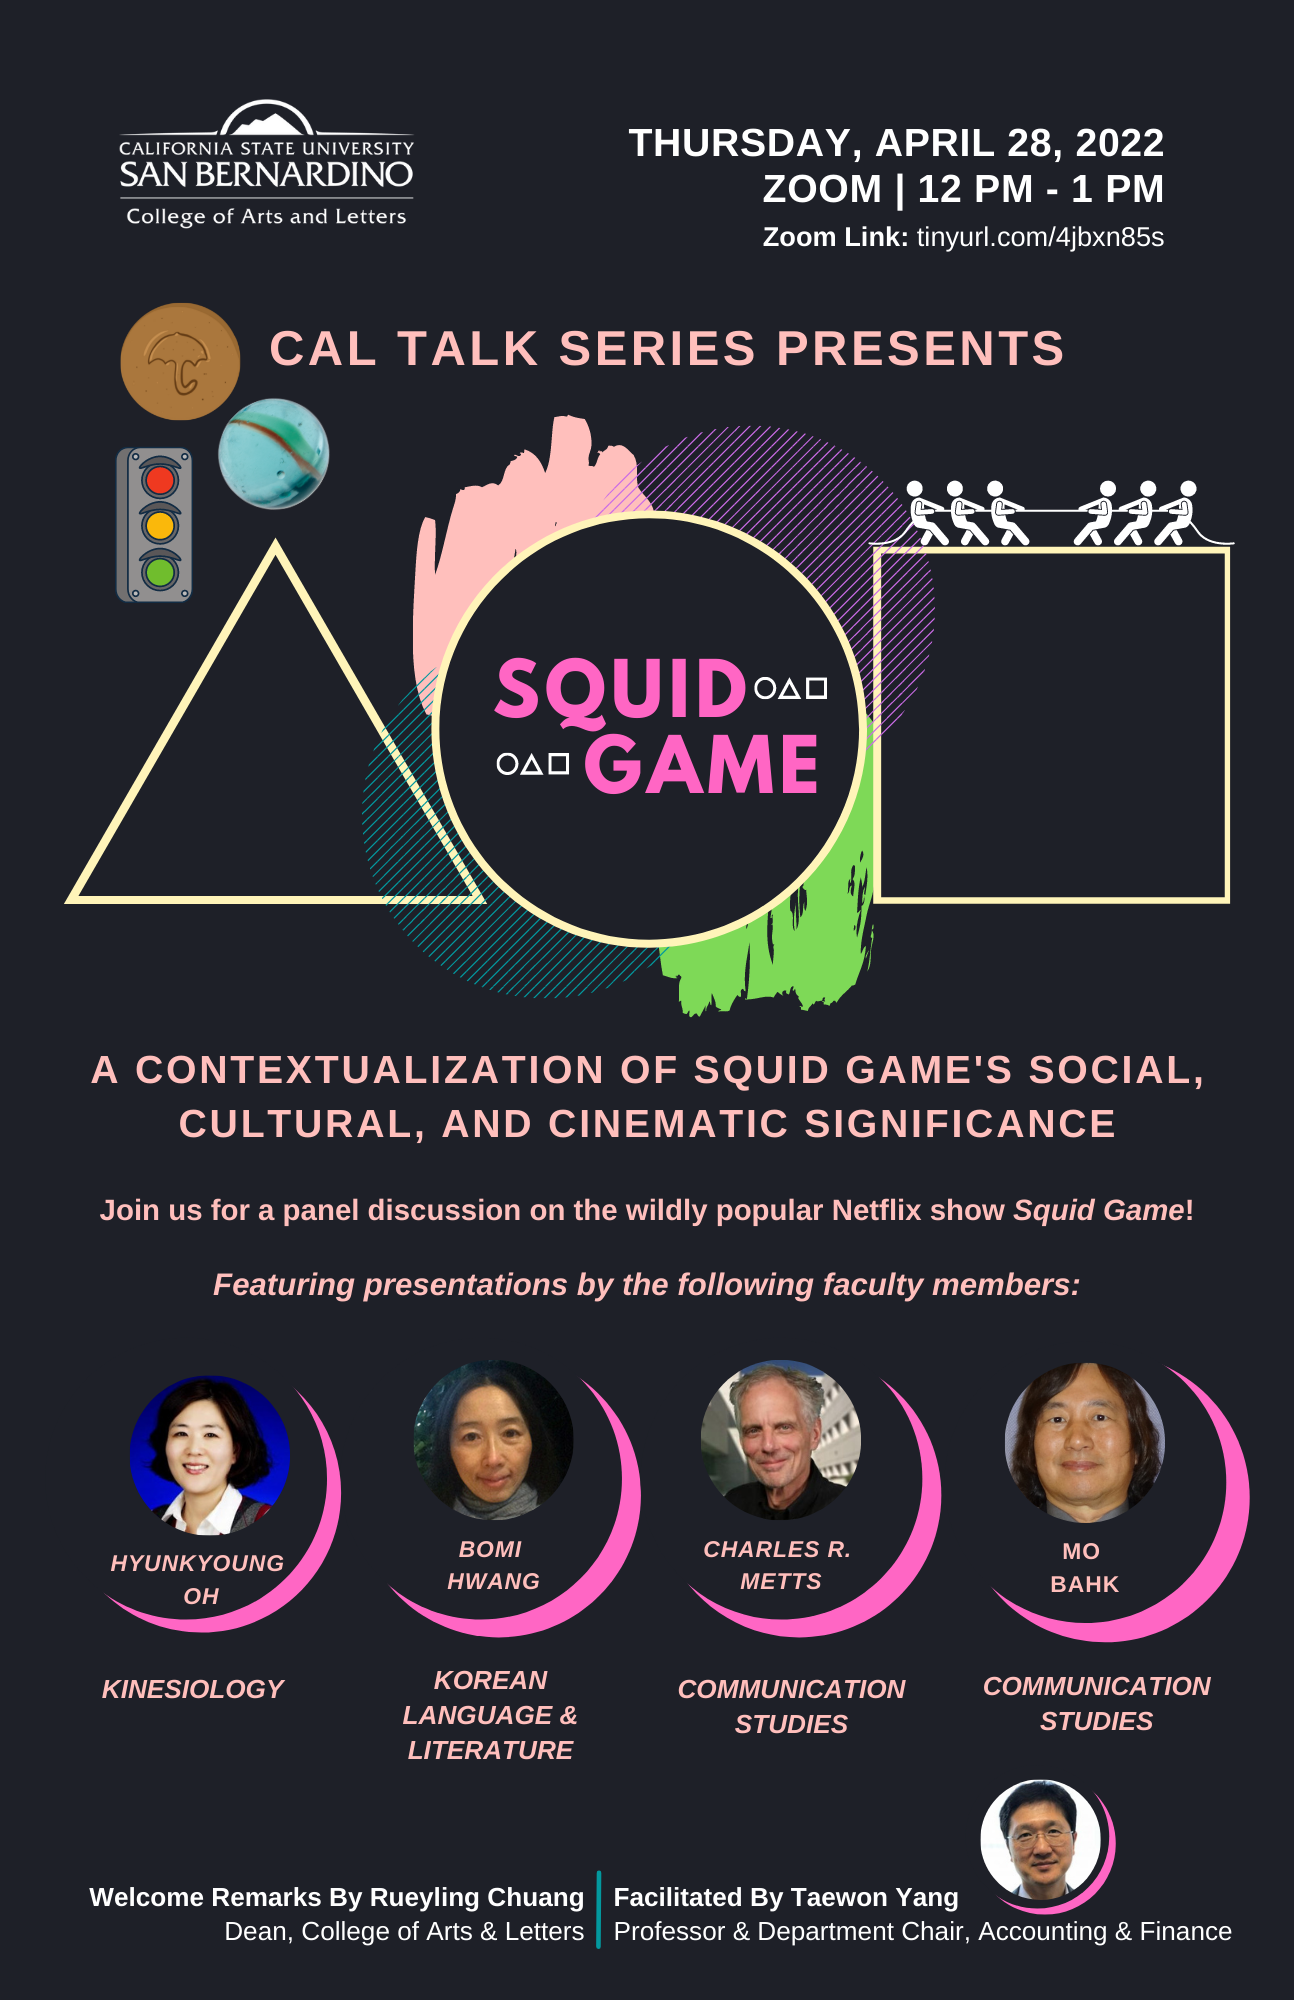 CAL talk series presents Squid Game Thursday, April 28 12pm-1pm